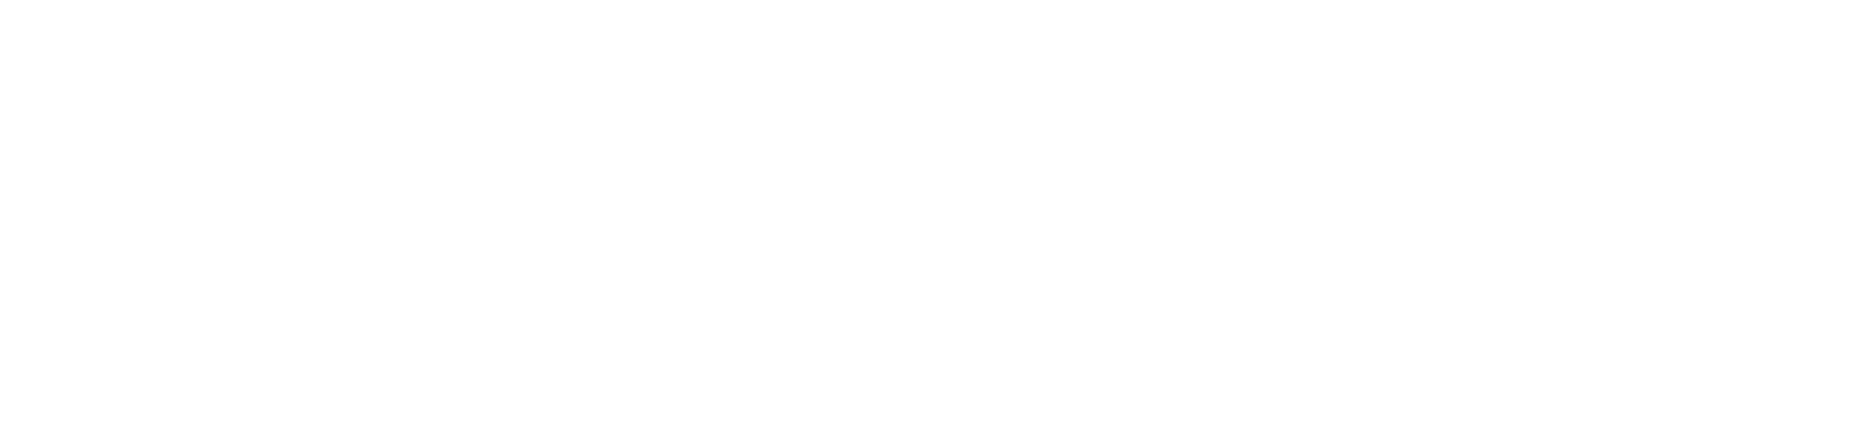 Surf-Skateboards Logo